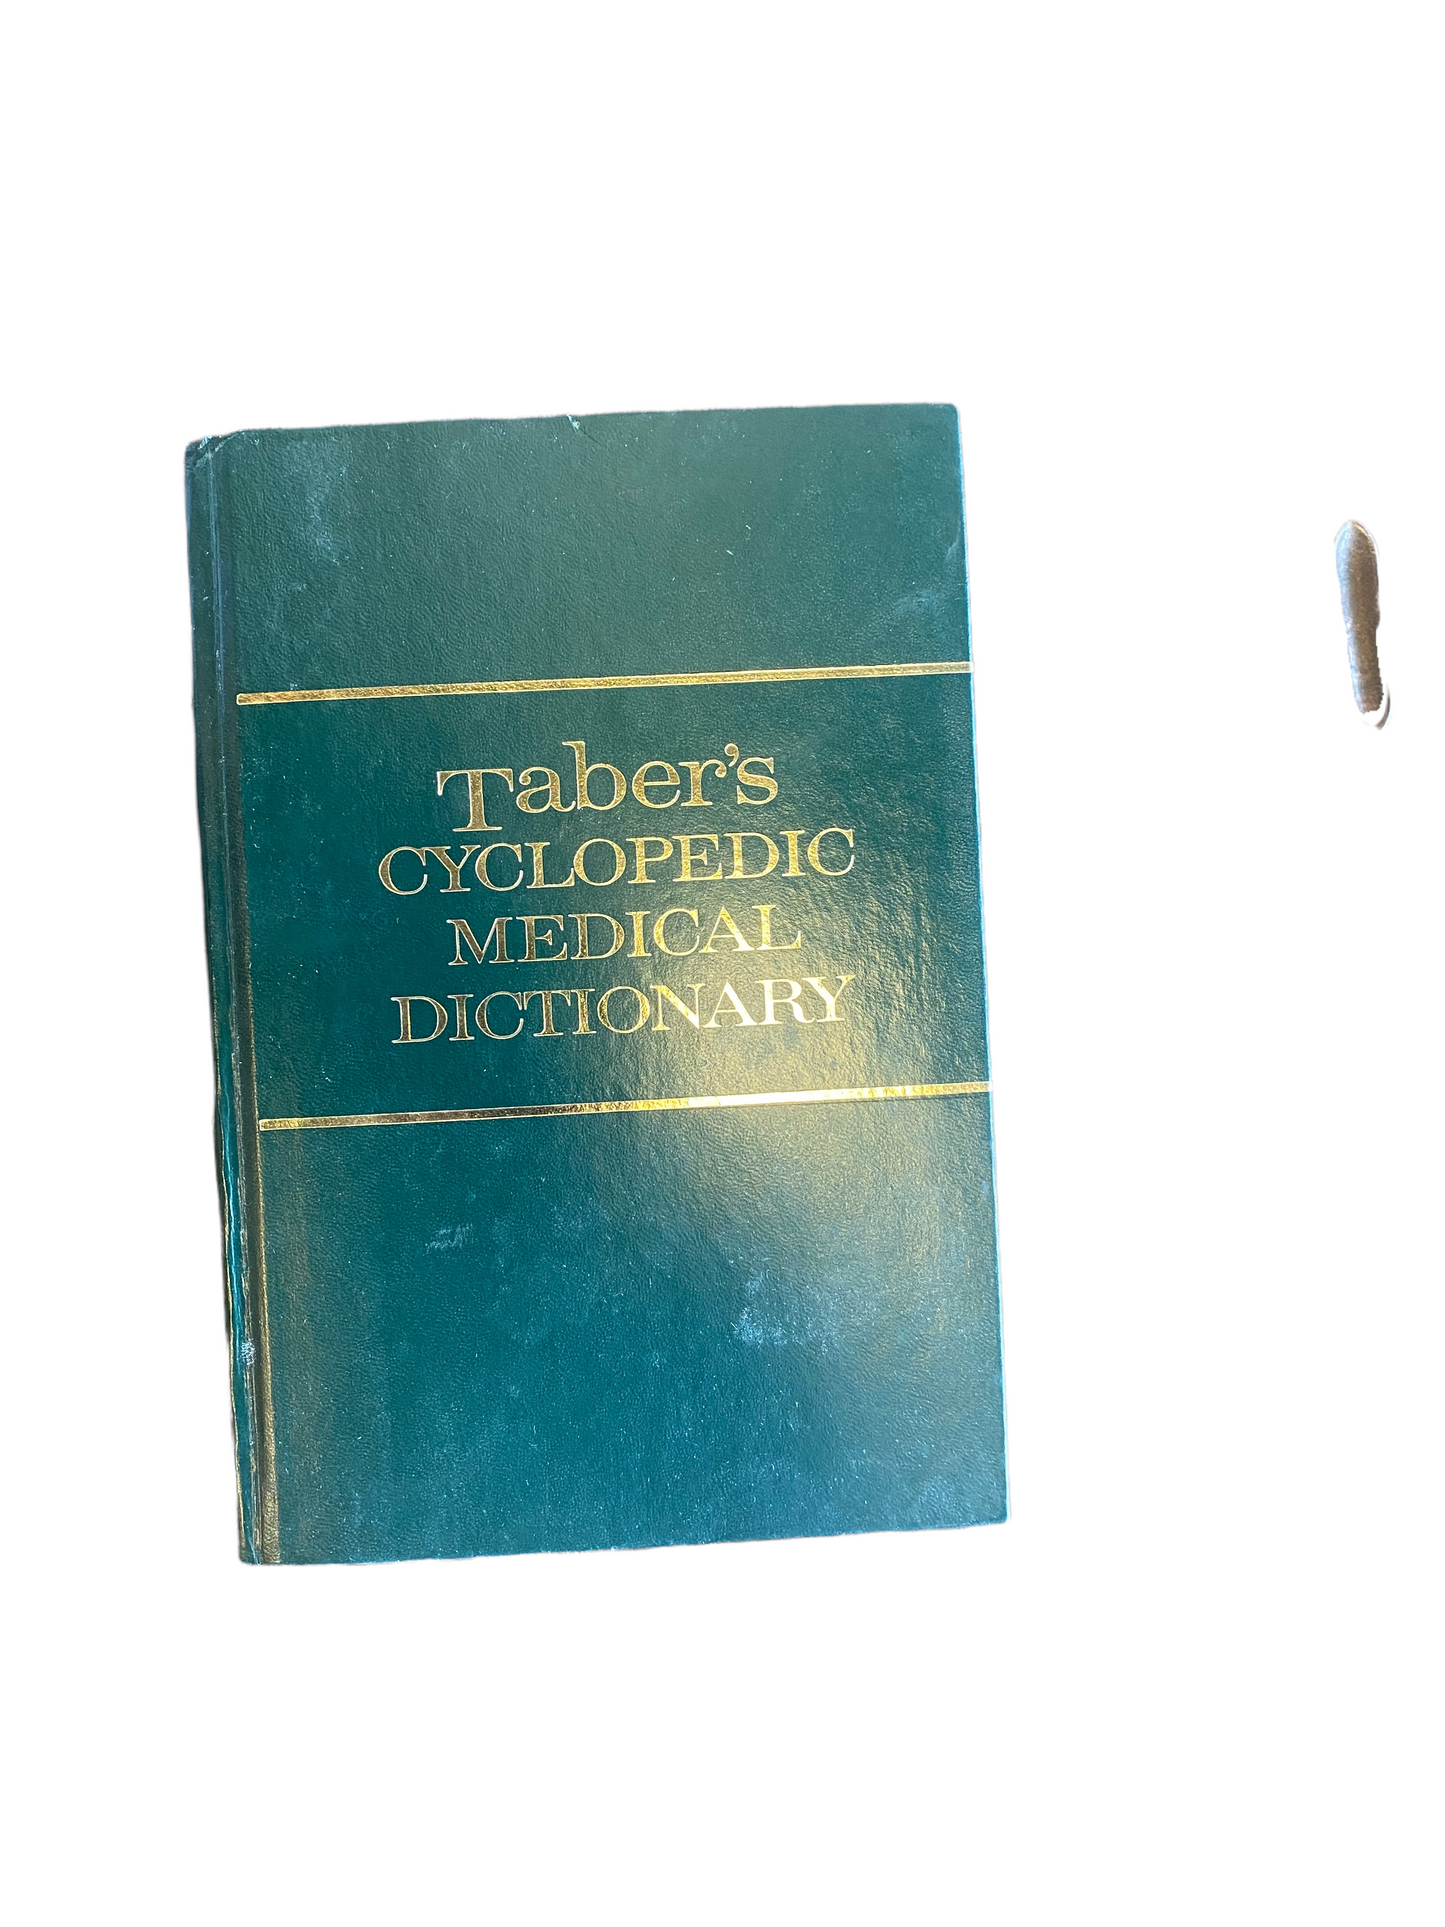 Taber's Cyclopedic Medical Dictionary 14th Edition